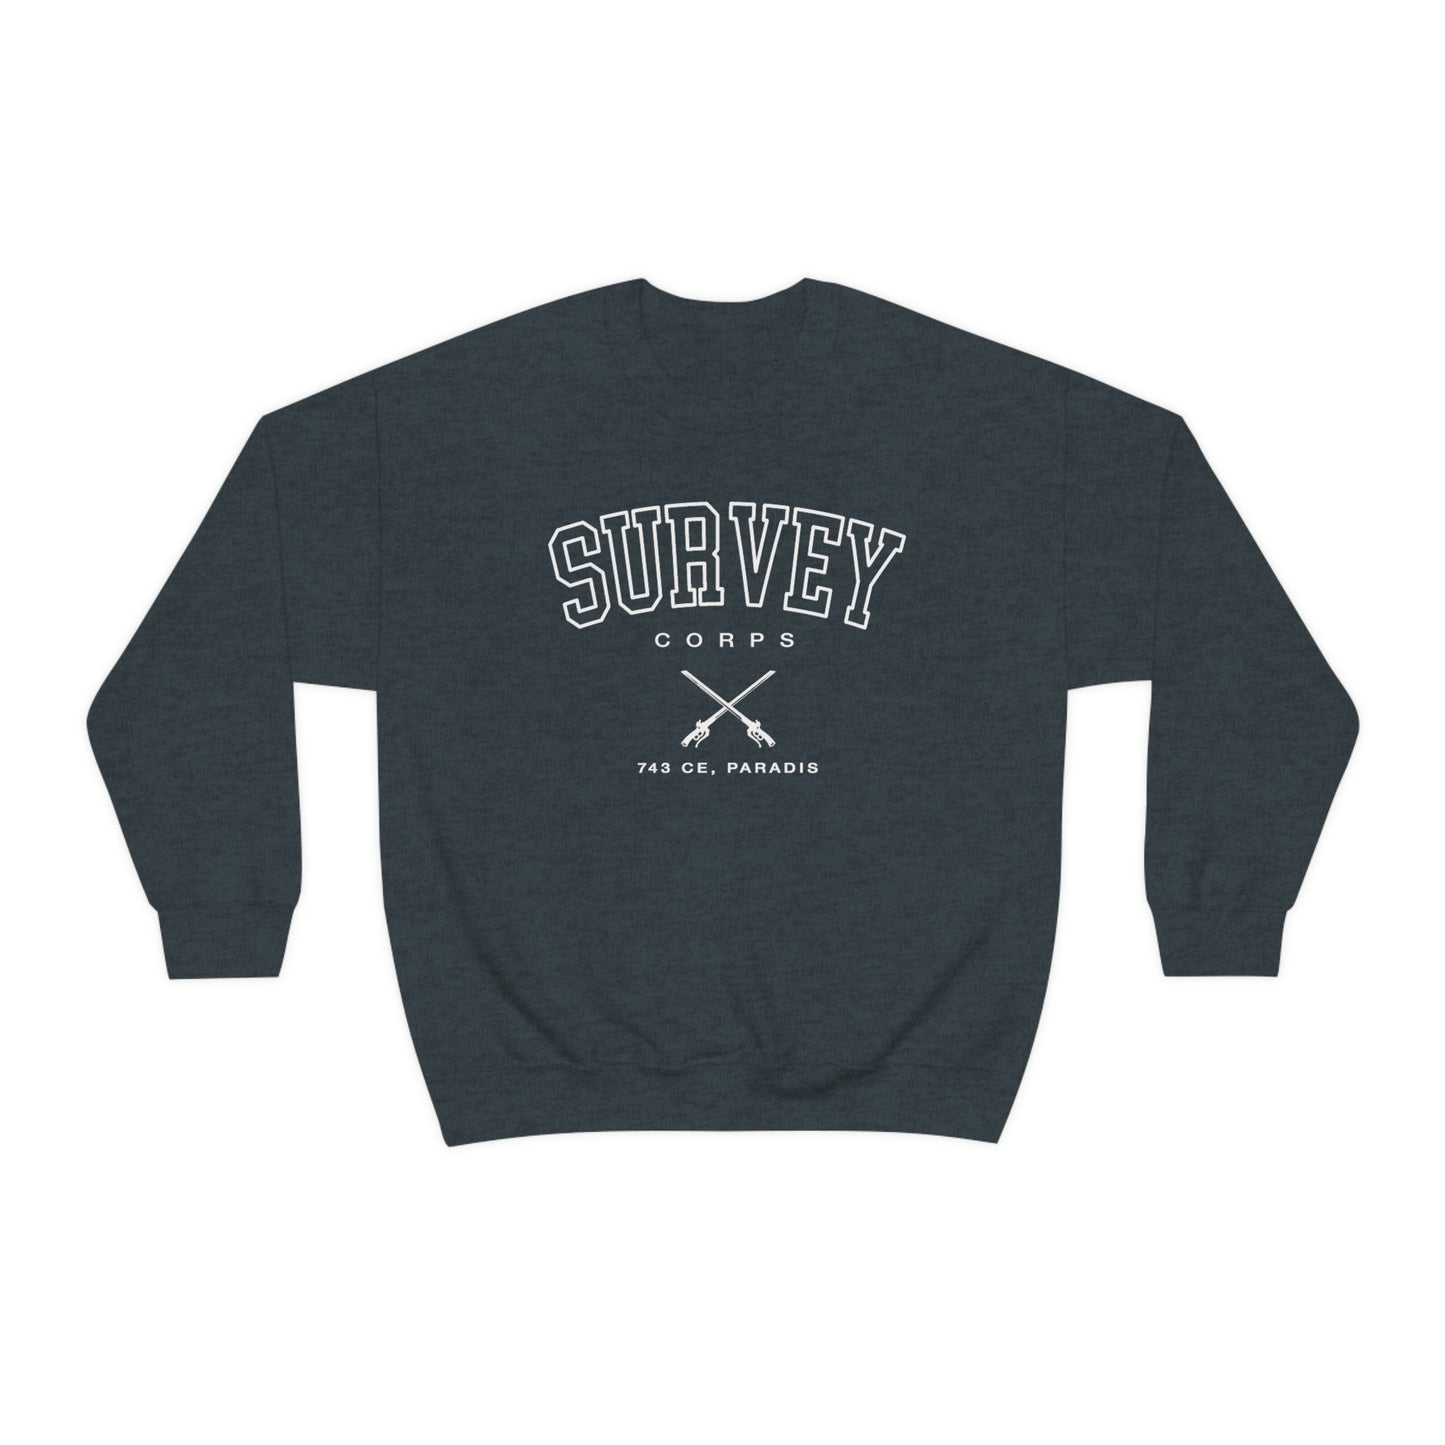 Survey Corp sweatshirt minimal